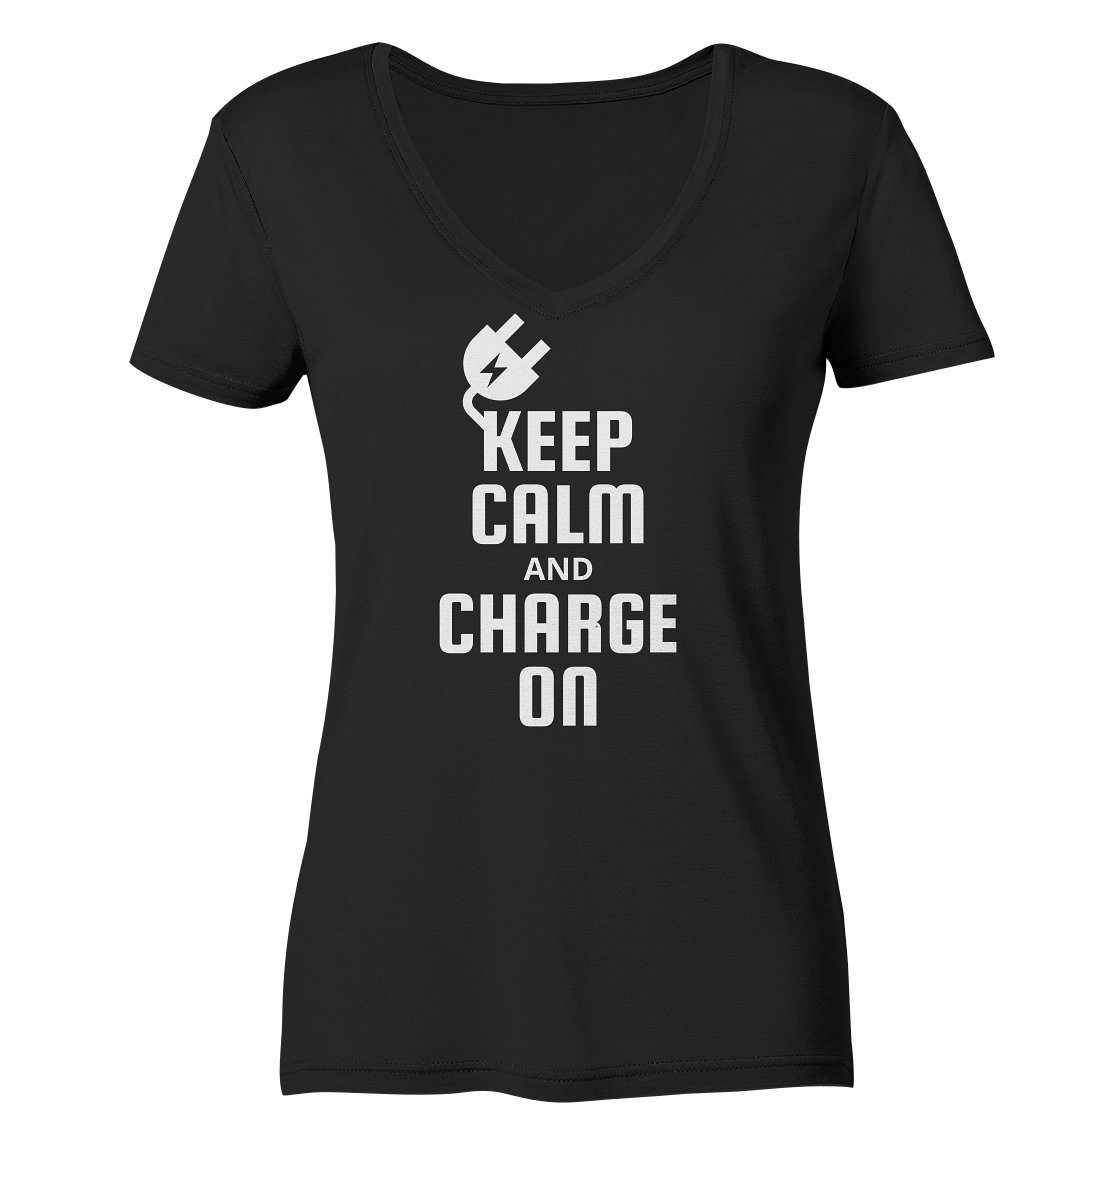 Charge on ORGANIC - Ladies Organic V-Neck Shirt